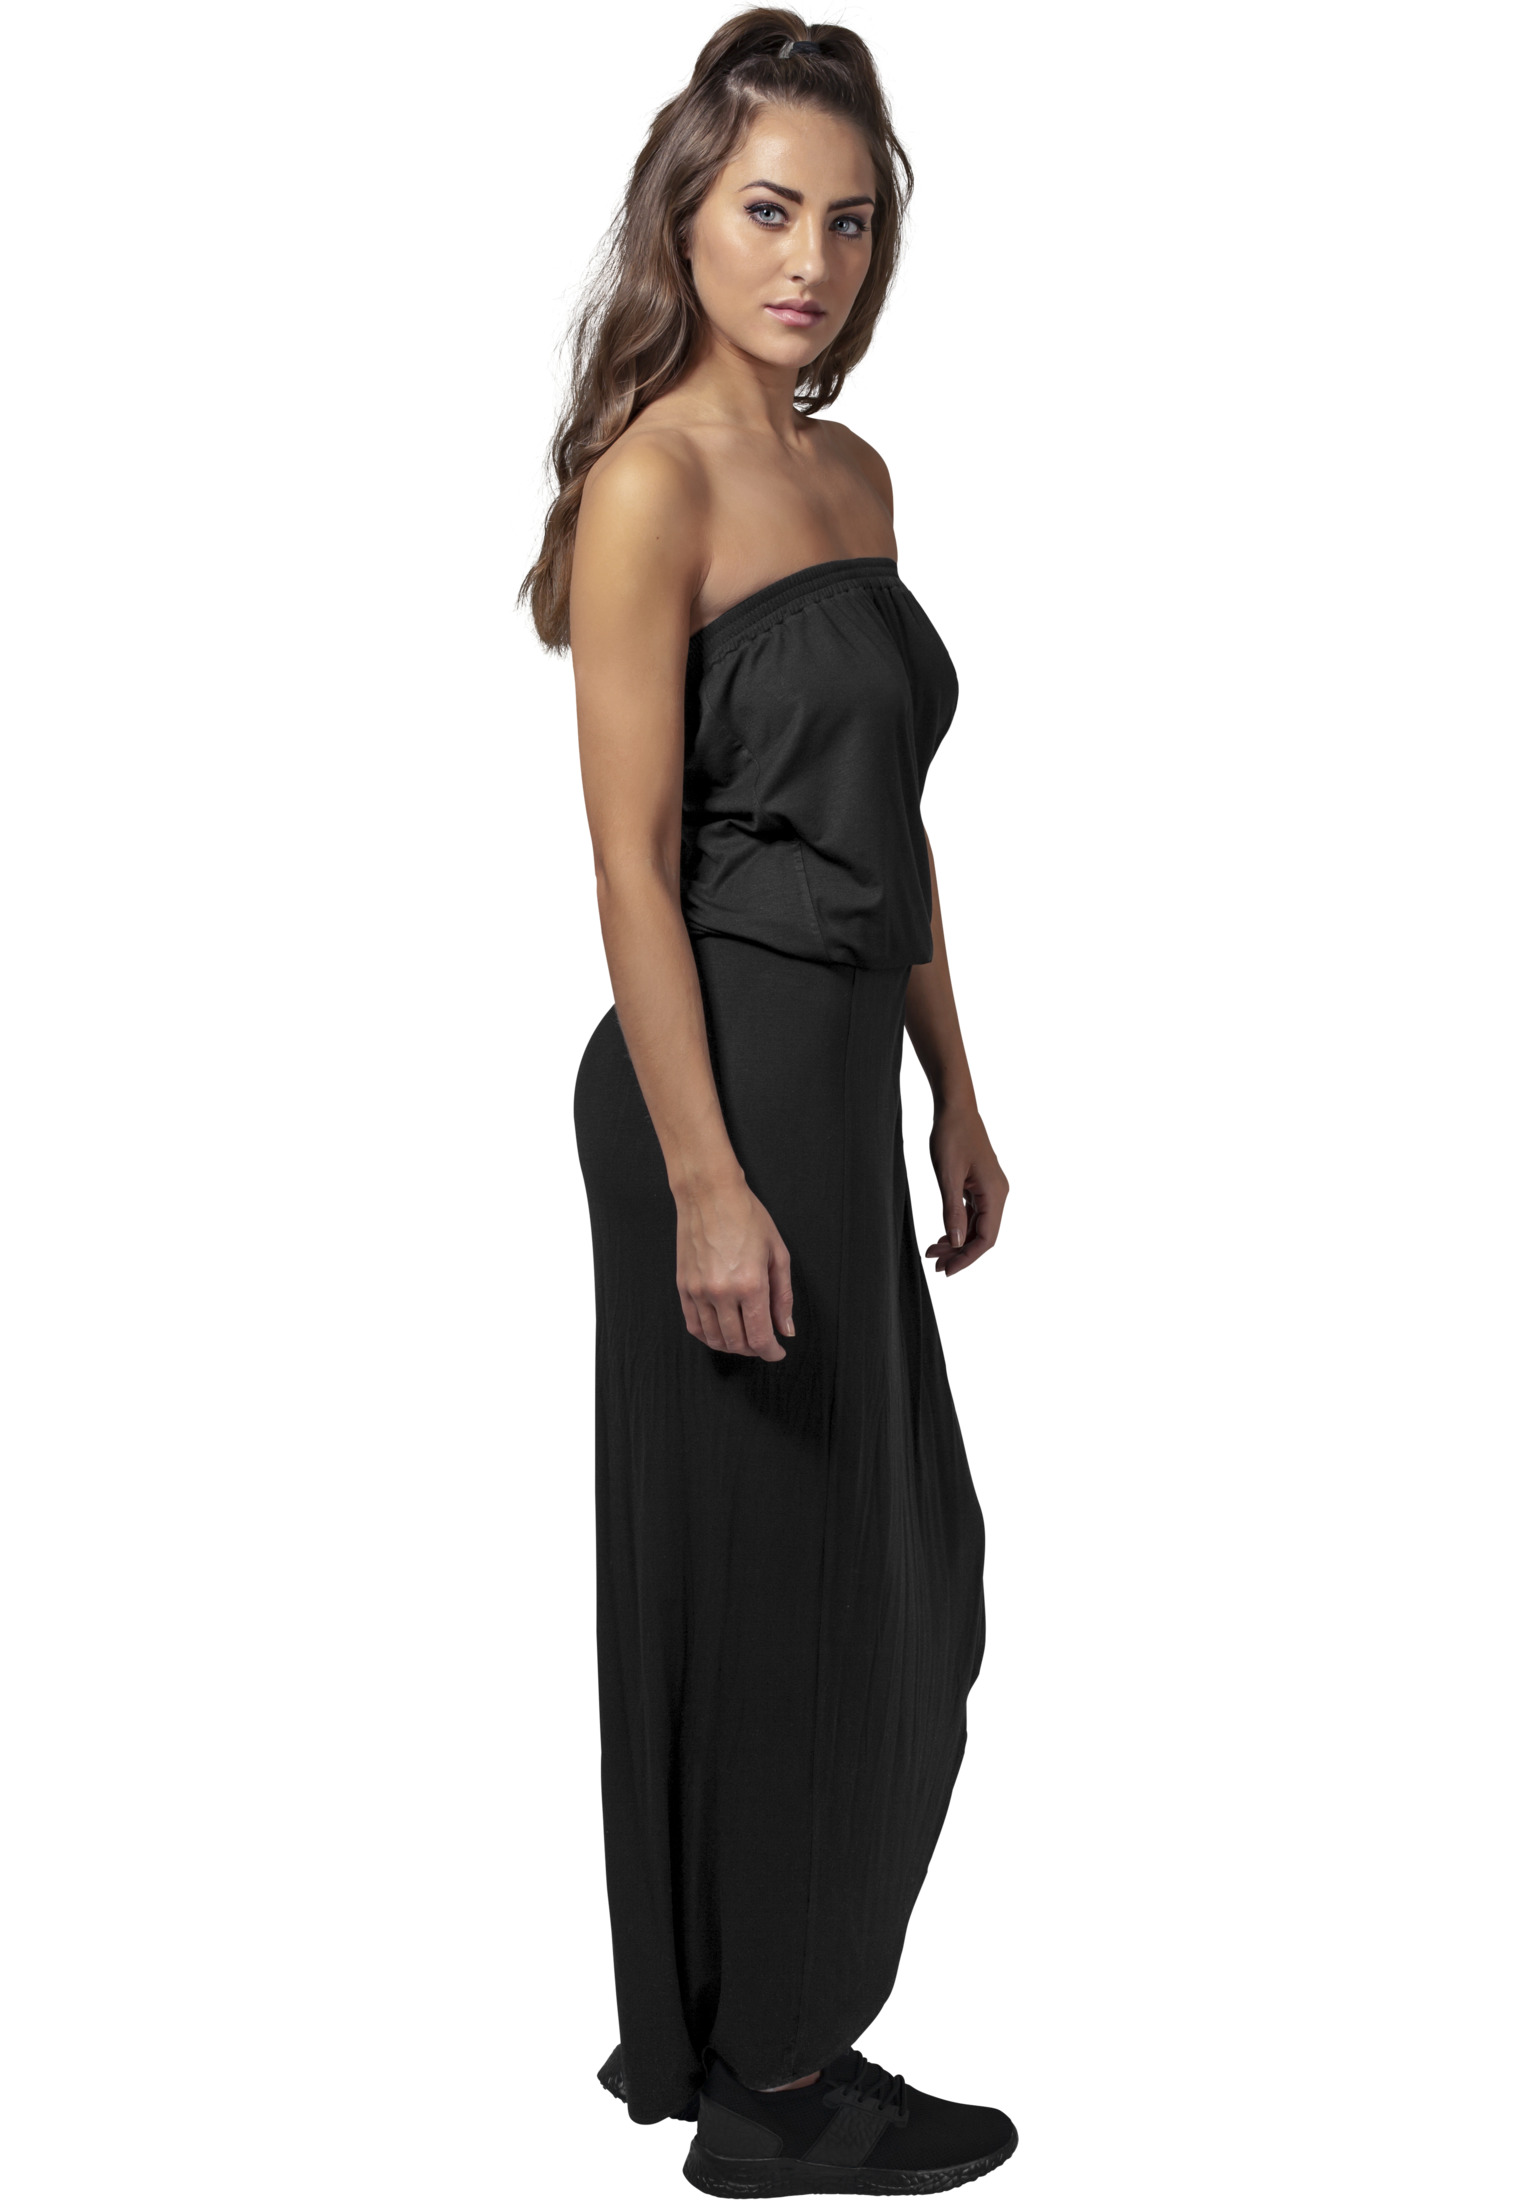 Kleider & R?cke Ladies Viscose Bandeau Dress in Farbe black